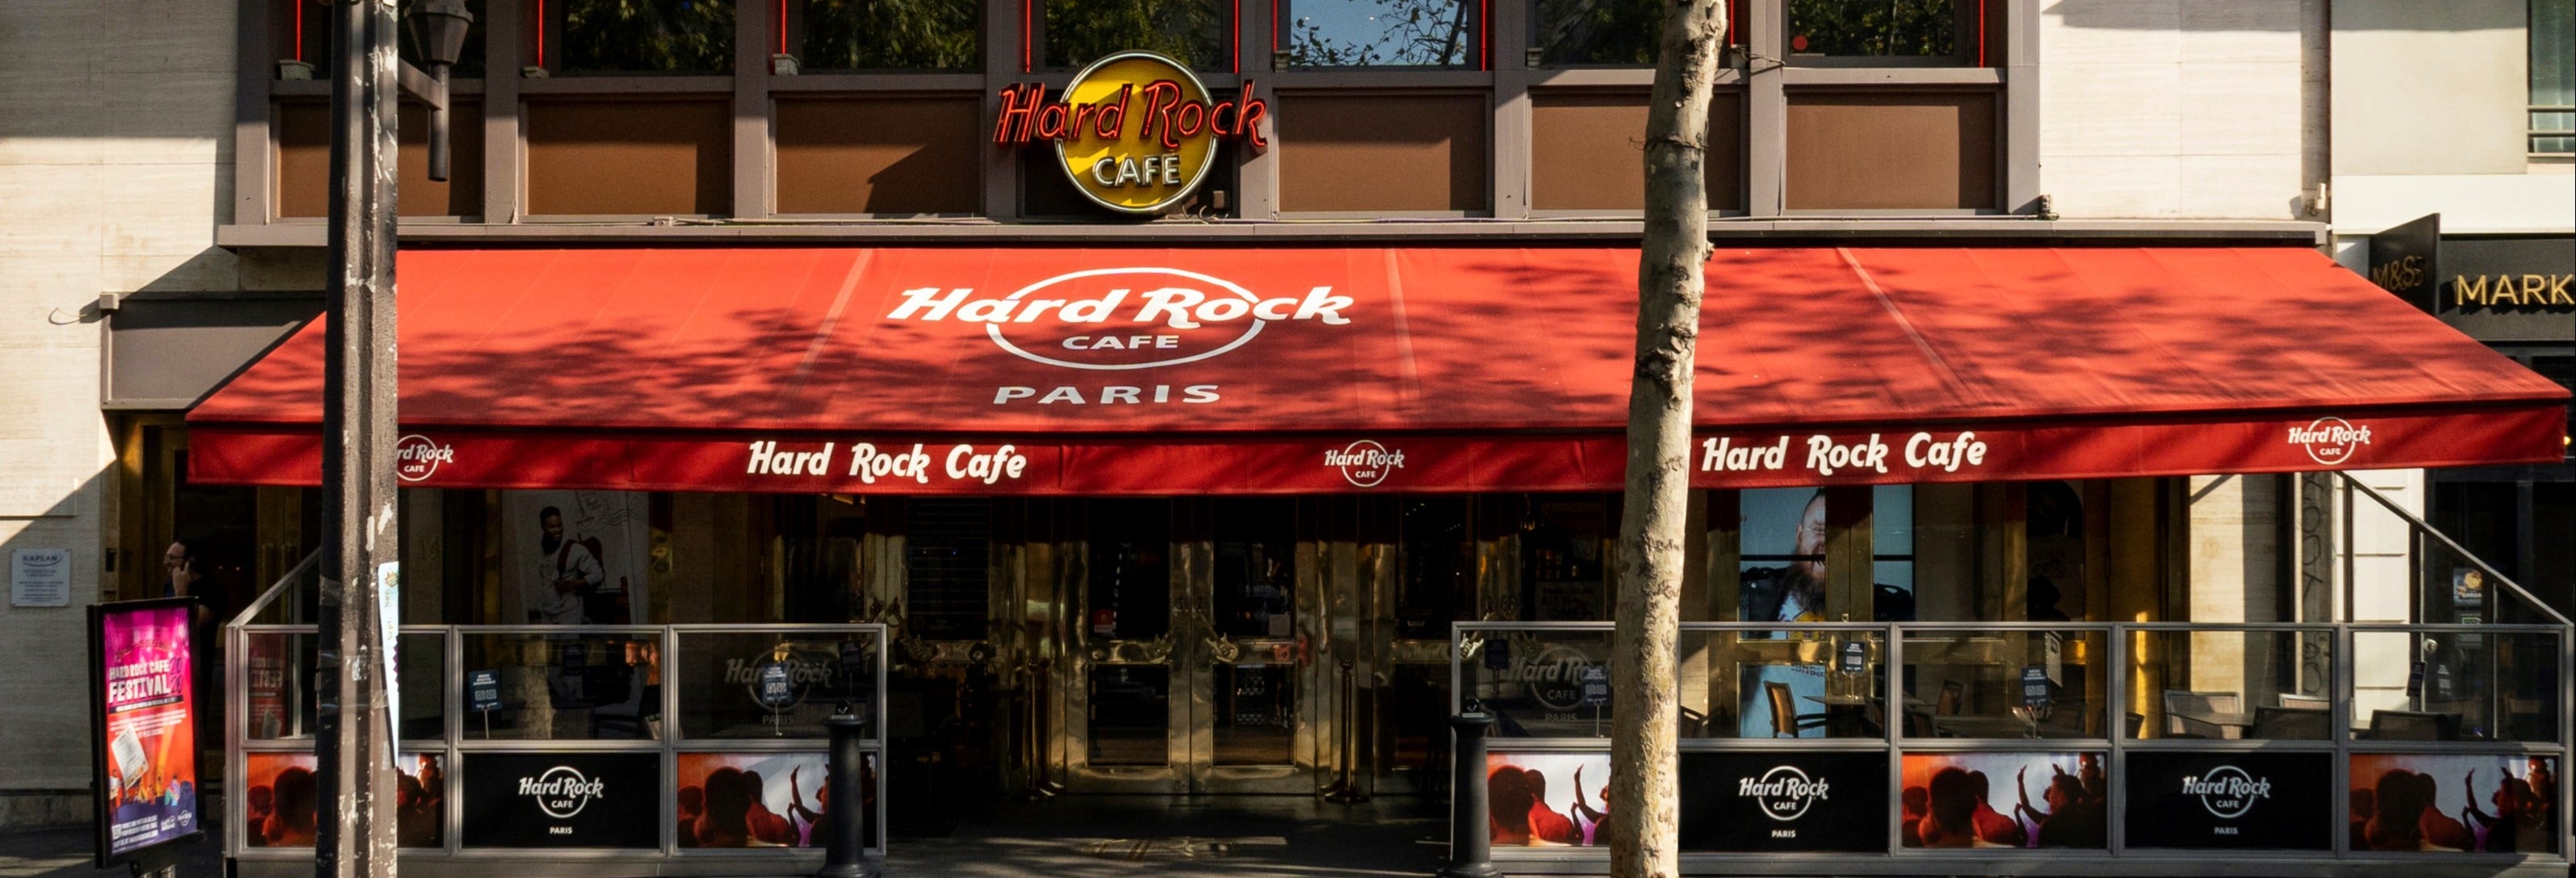 Hard Rock Cafe Paris sem filas